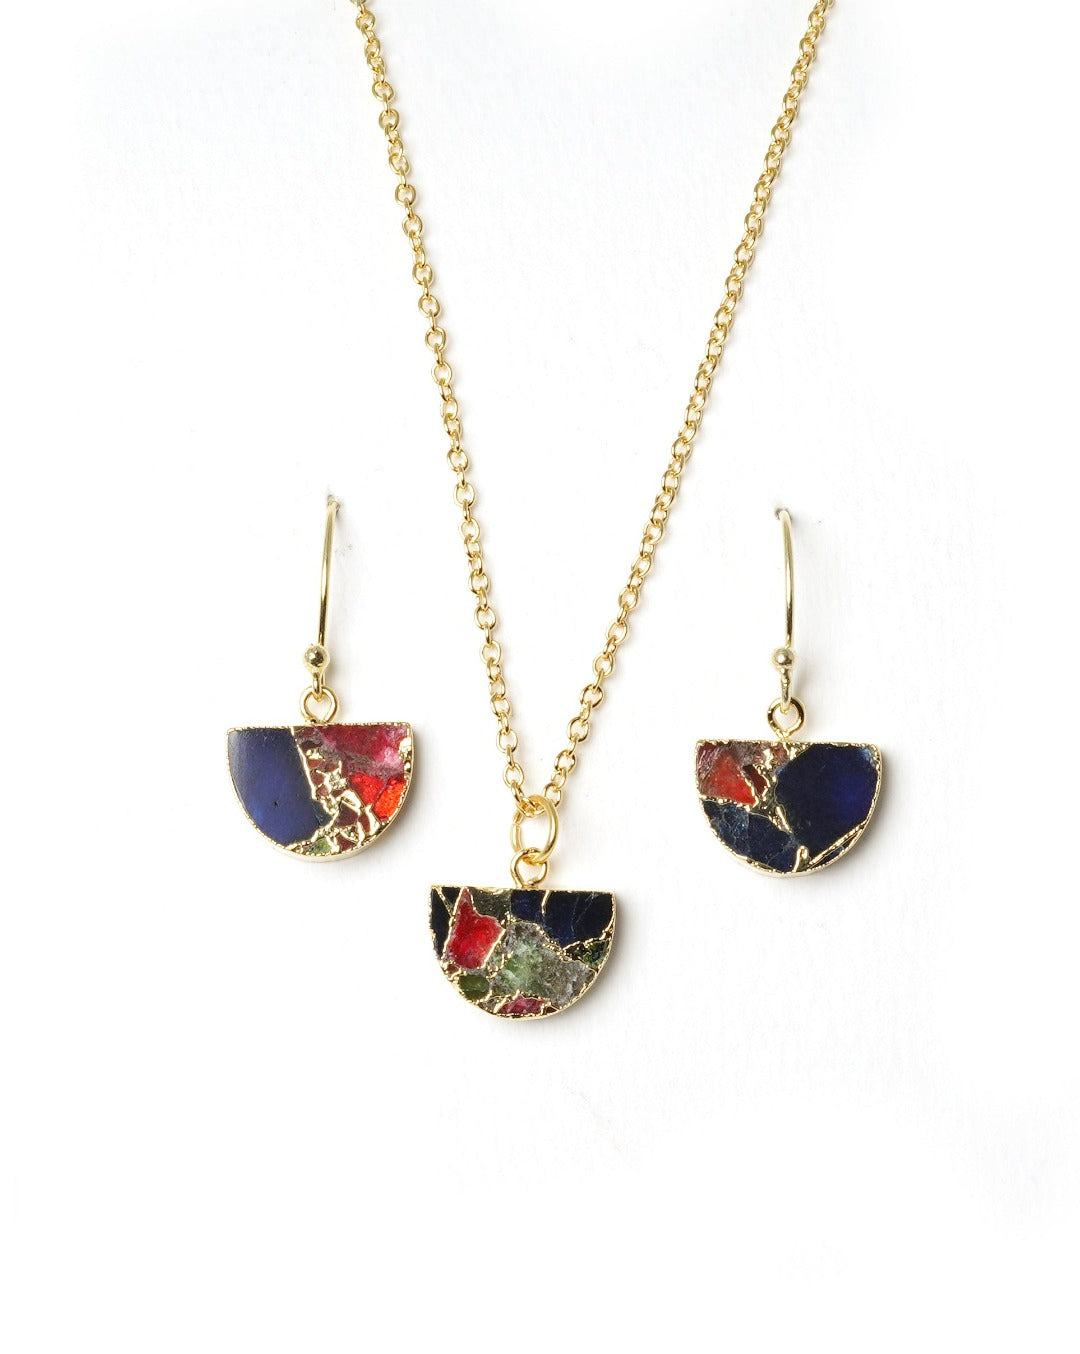 Half moon shaped multicolour pendant with small earrings